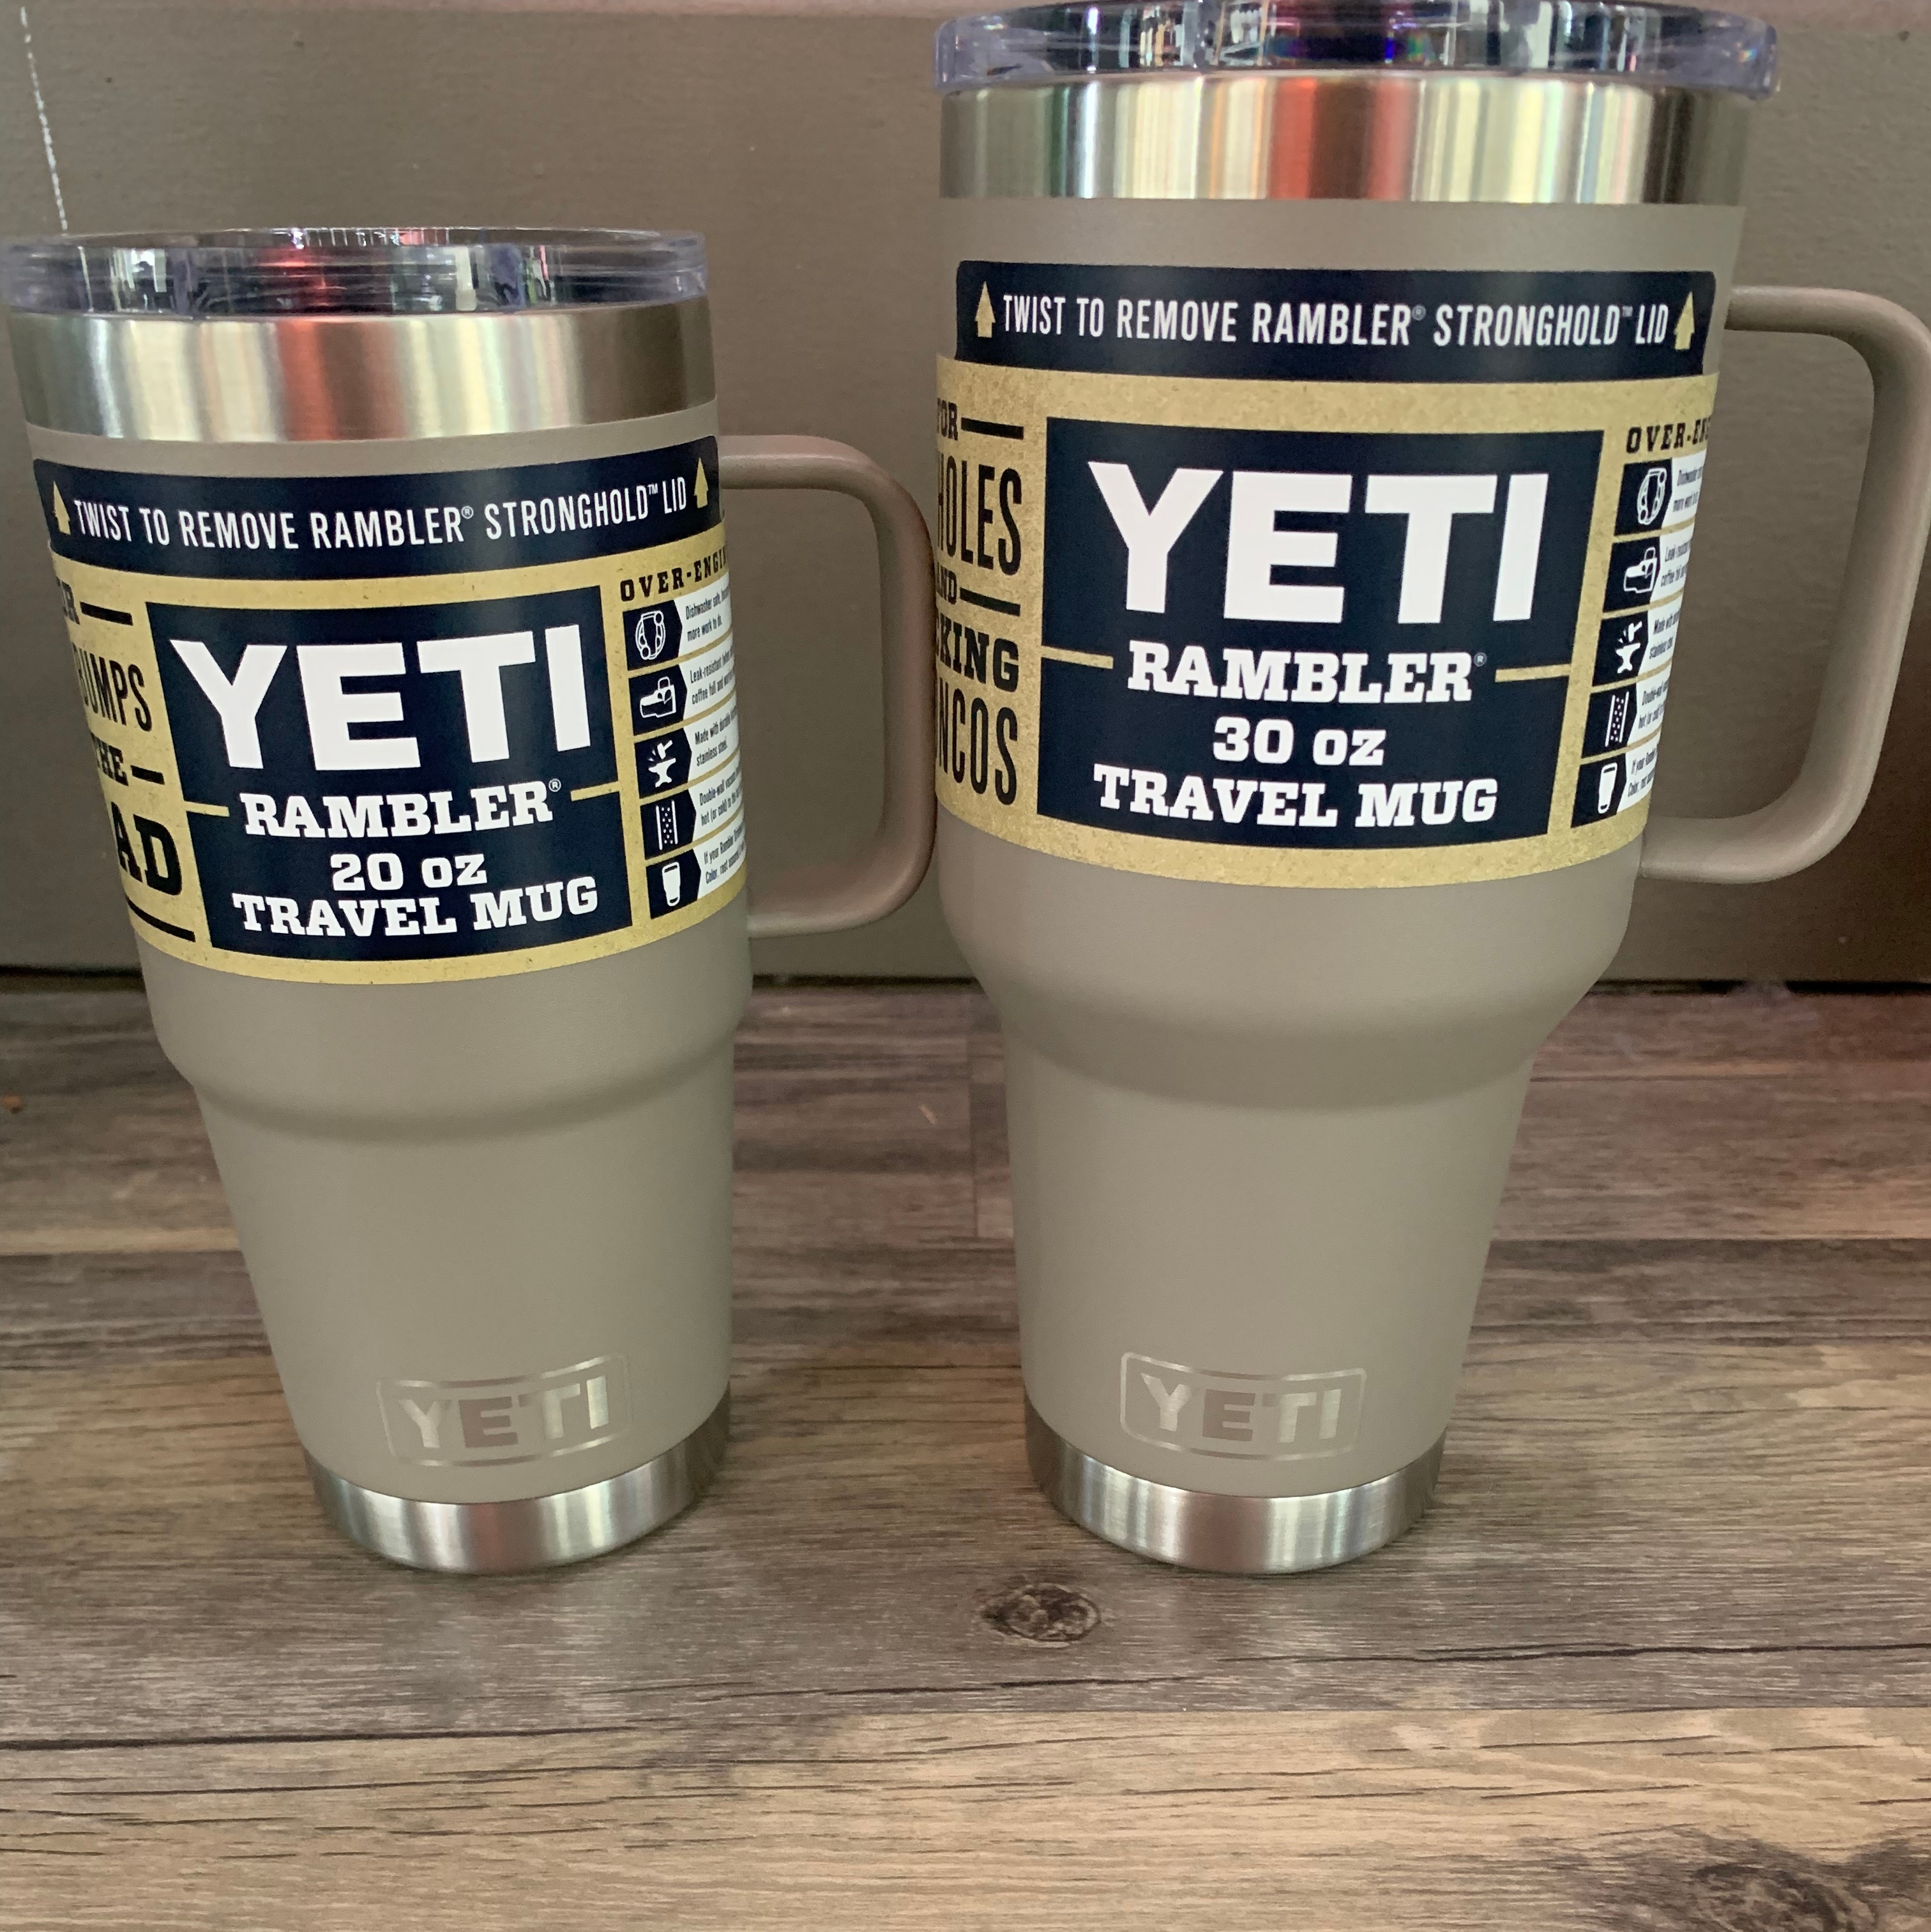 YETI Rambler Stronghold Lid for Travel Mug